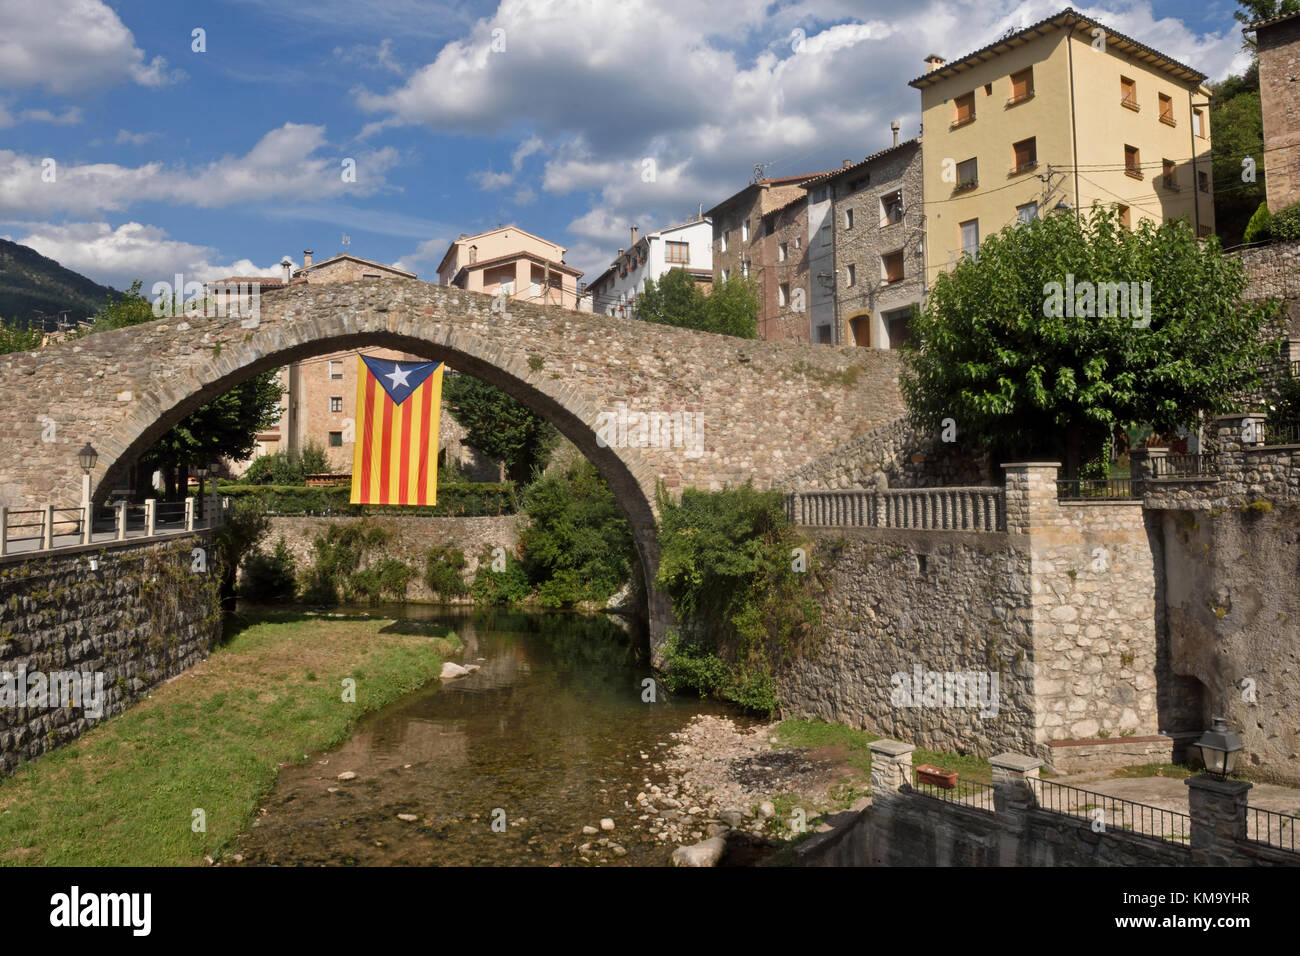 Dorf La poble de Lillet, bergueda, Provinz Barcelona, Katalonien, Spanien Stockfoto